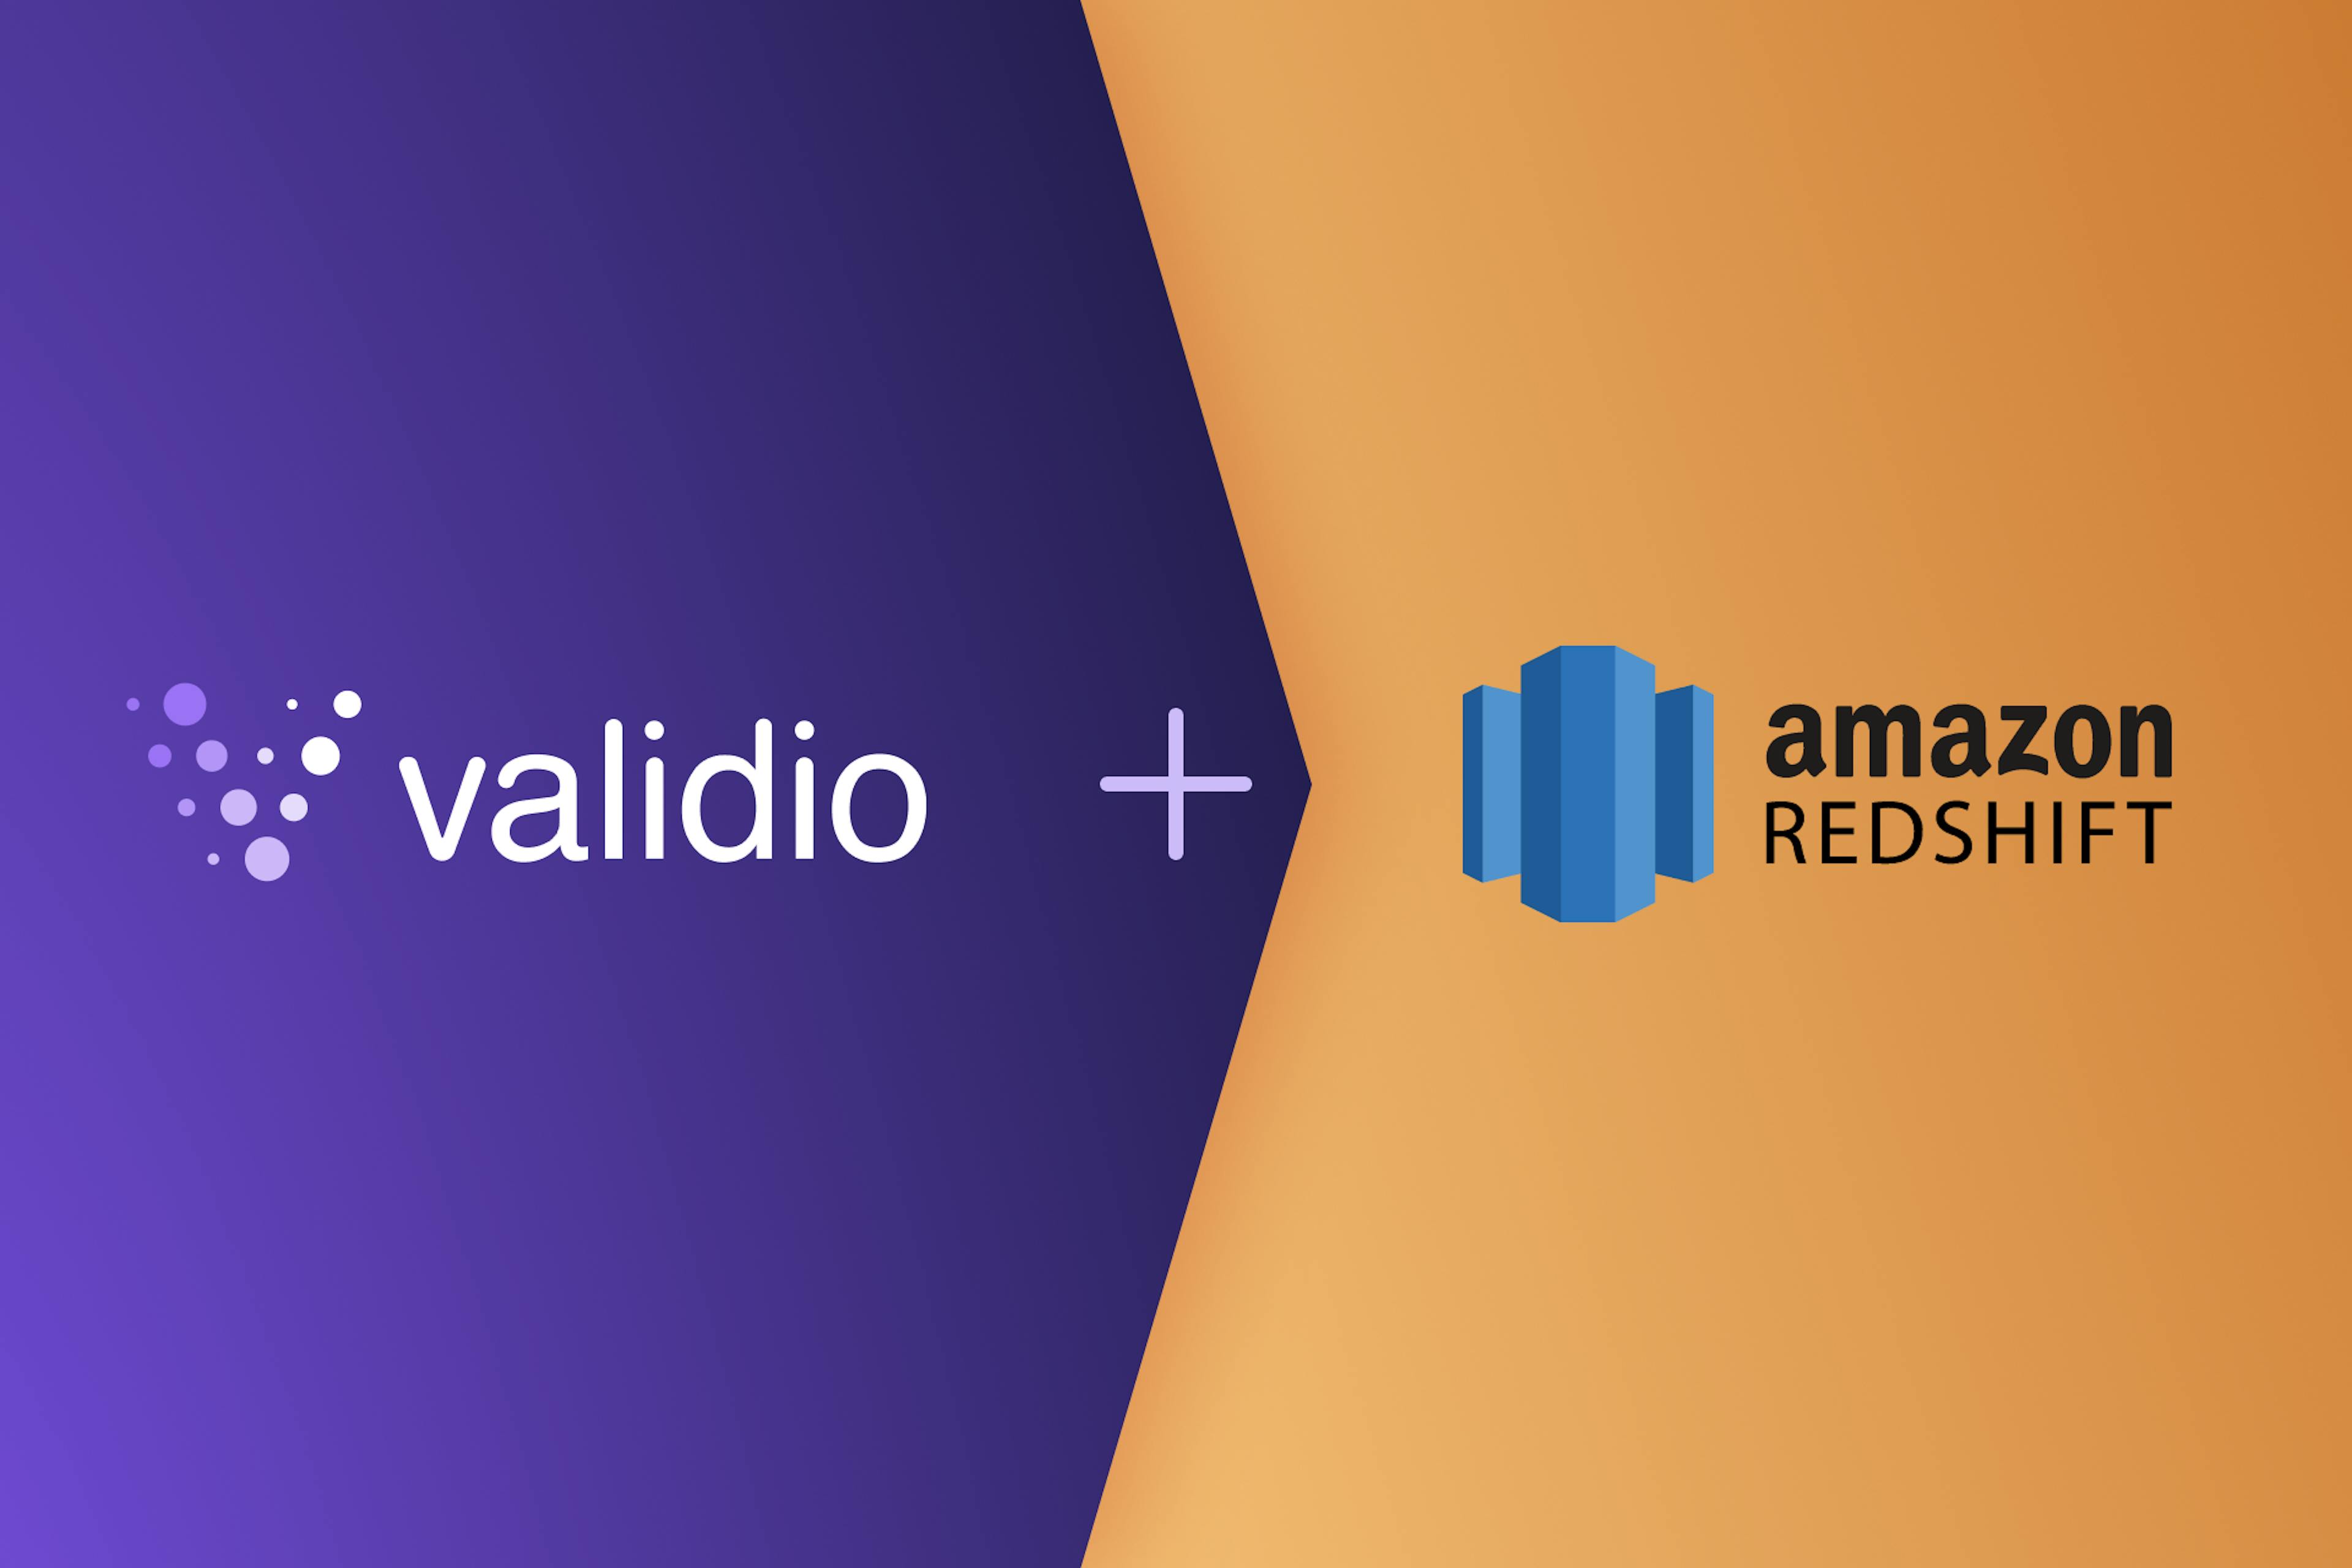 Validio+Amazon Redshift